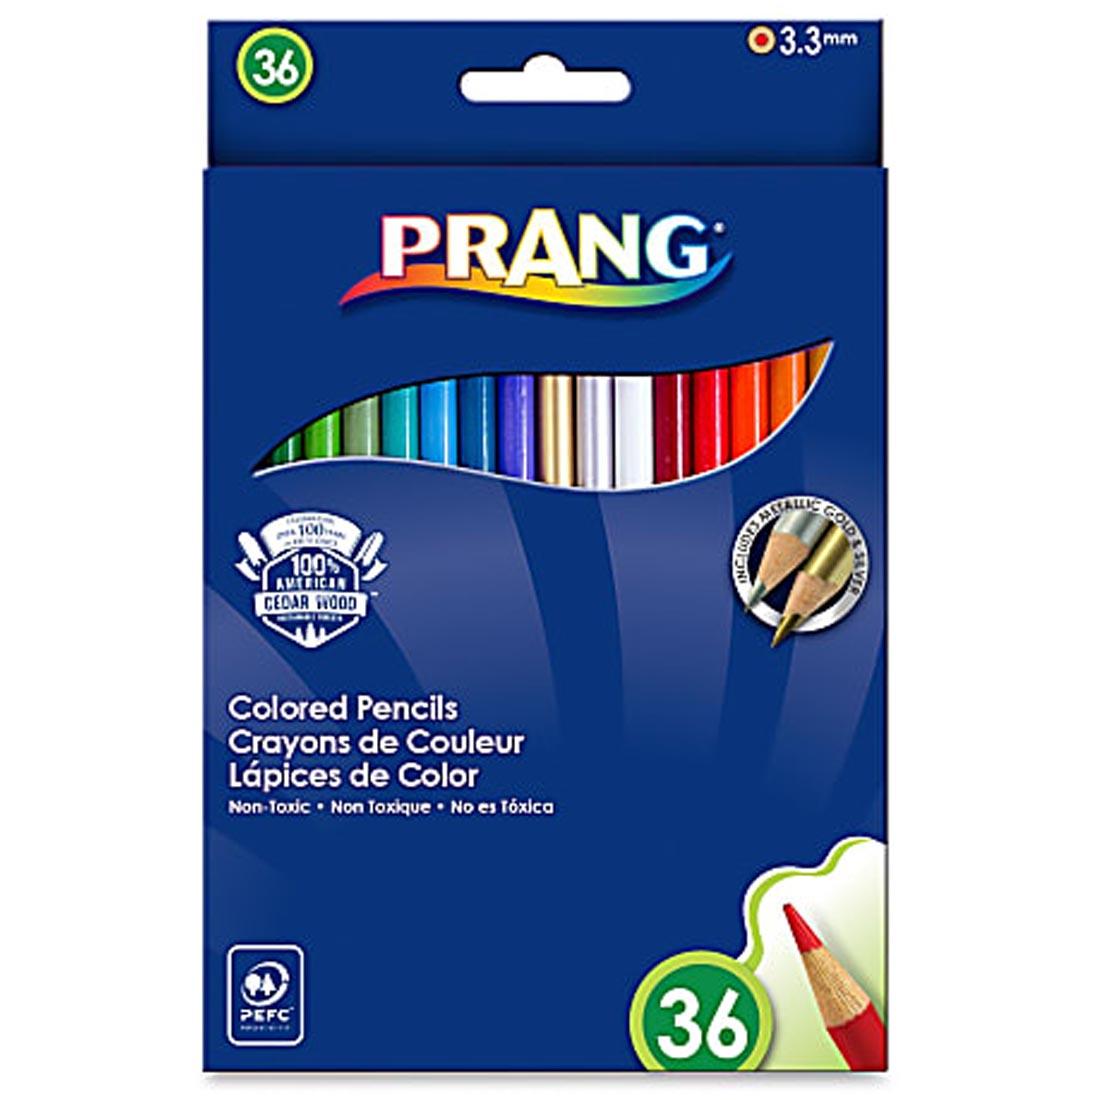 Prang Colored Pencils 36-Color Set